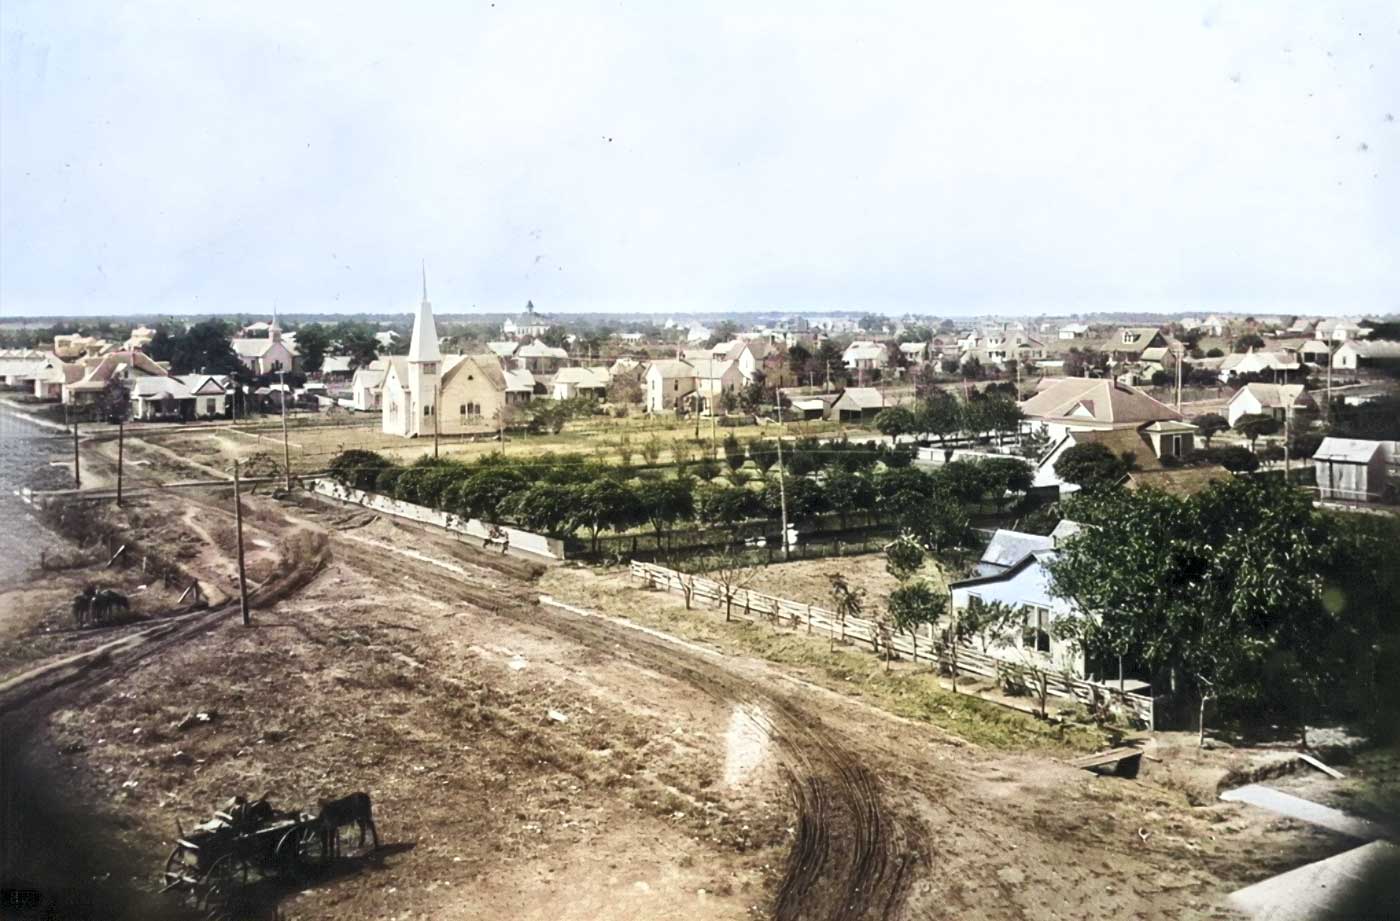 Arlington Texas (1900s)